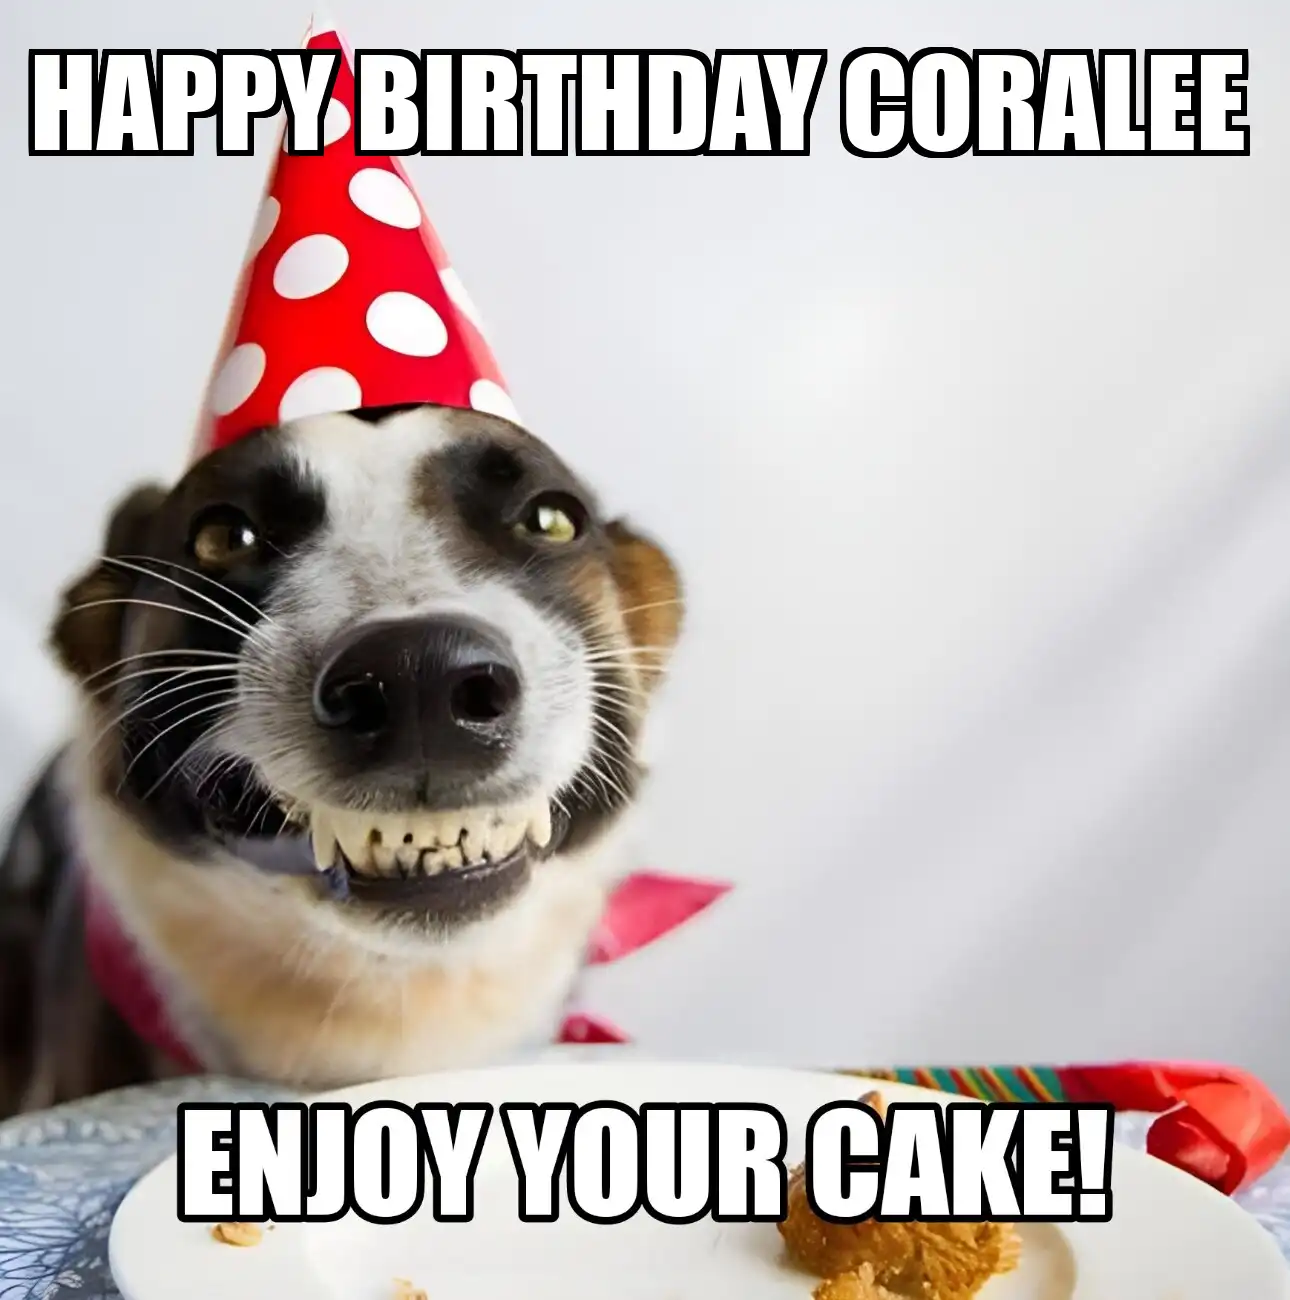 Happy Birthday Coralee Enjoy Your Cake Dog Meme